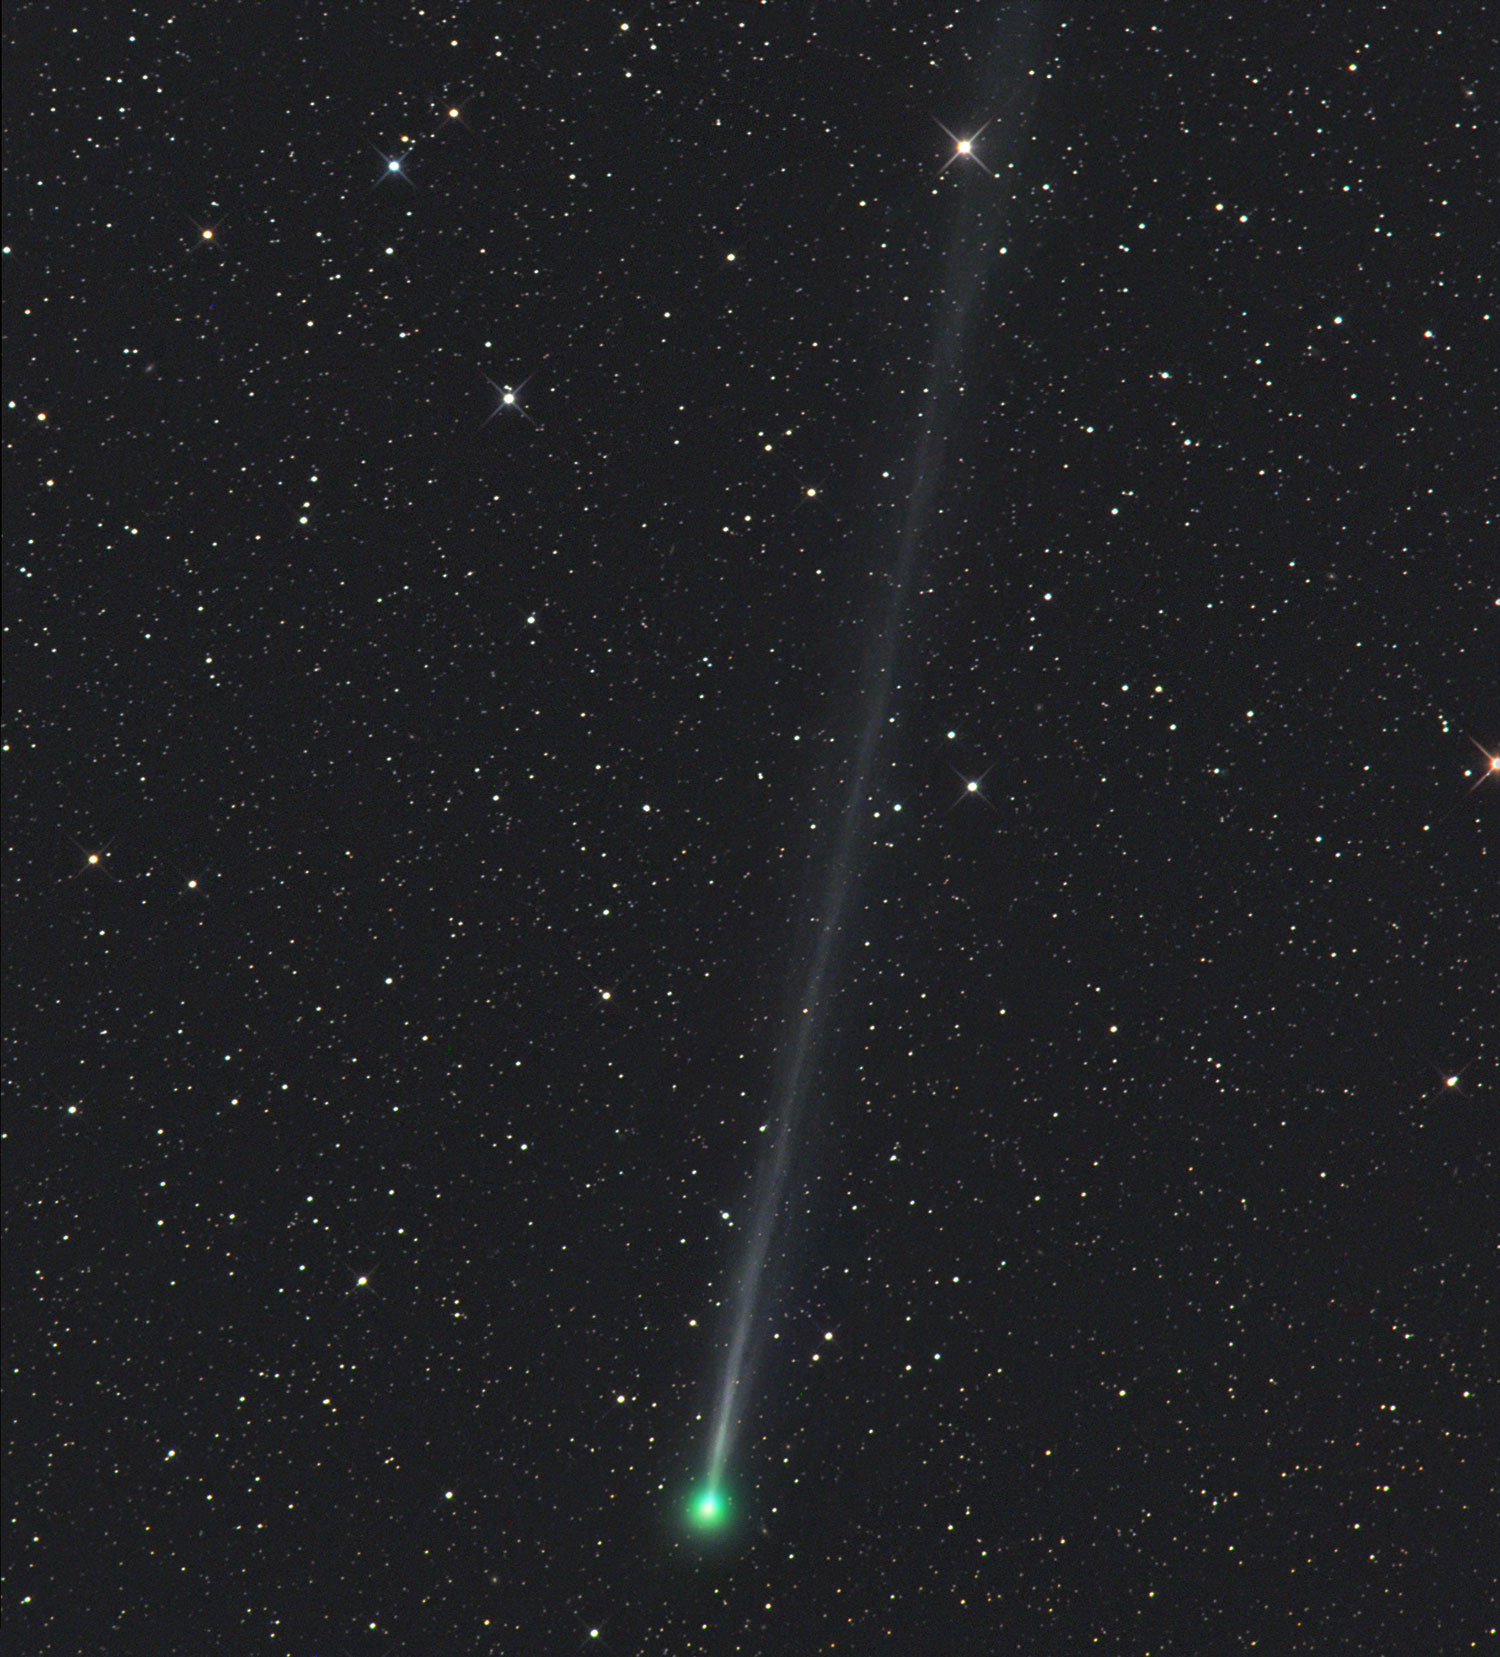 greenish comet against stars